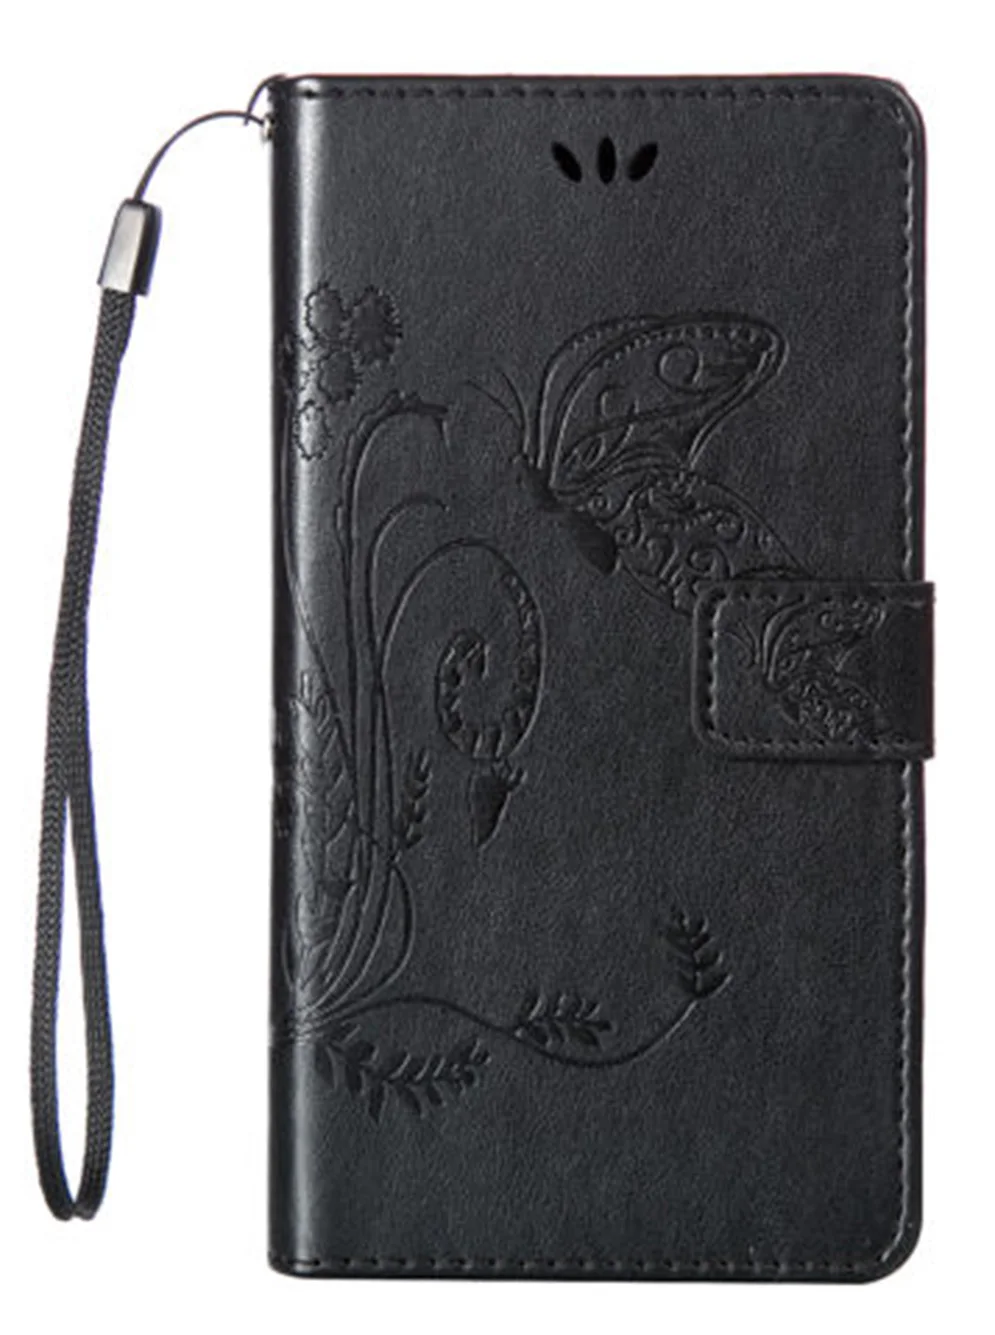 Кожаный чехол-книжка с бабочкой для inei 2 3 5 6 7 Lite 3 power 5 Pro 8 защитный чехол-книжка для телефона - Цвет: Black